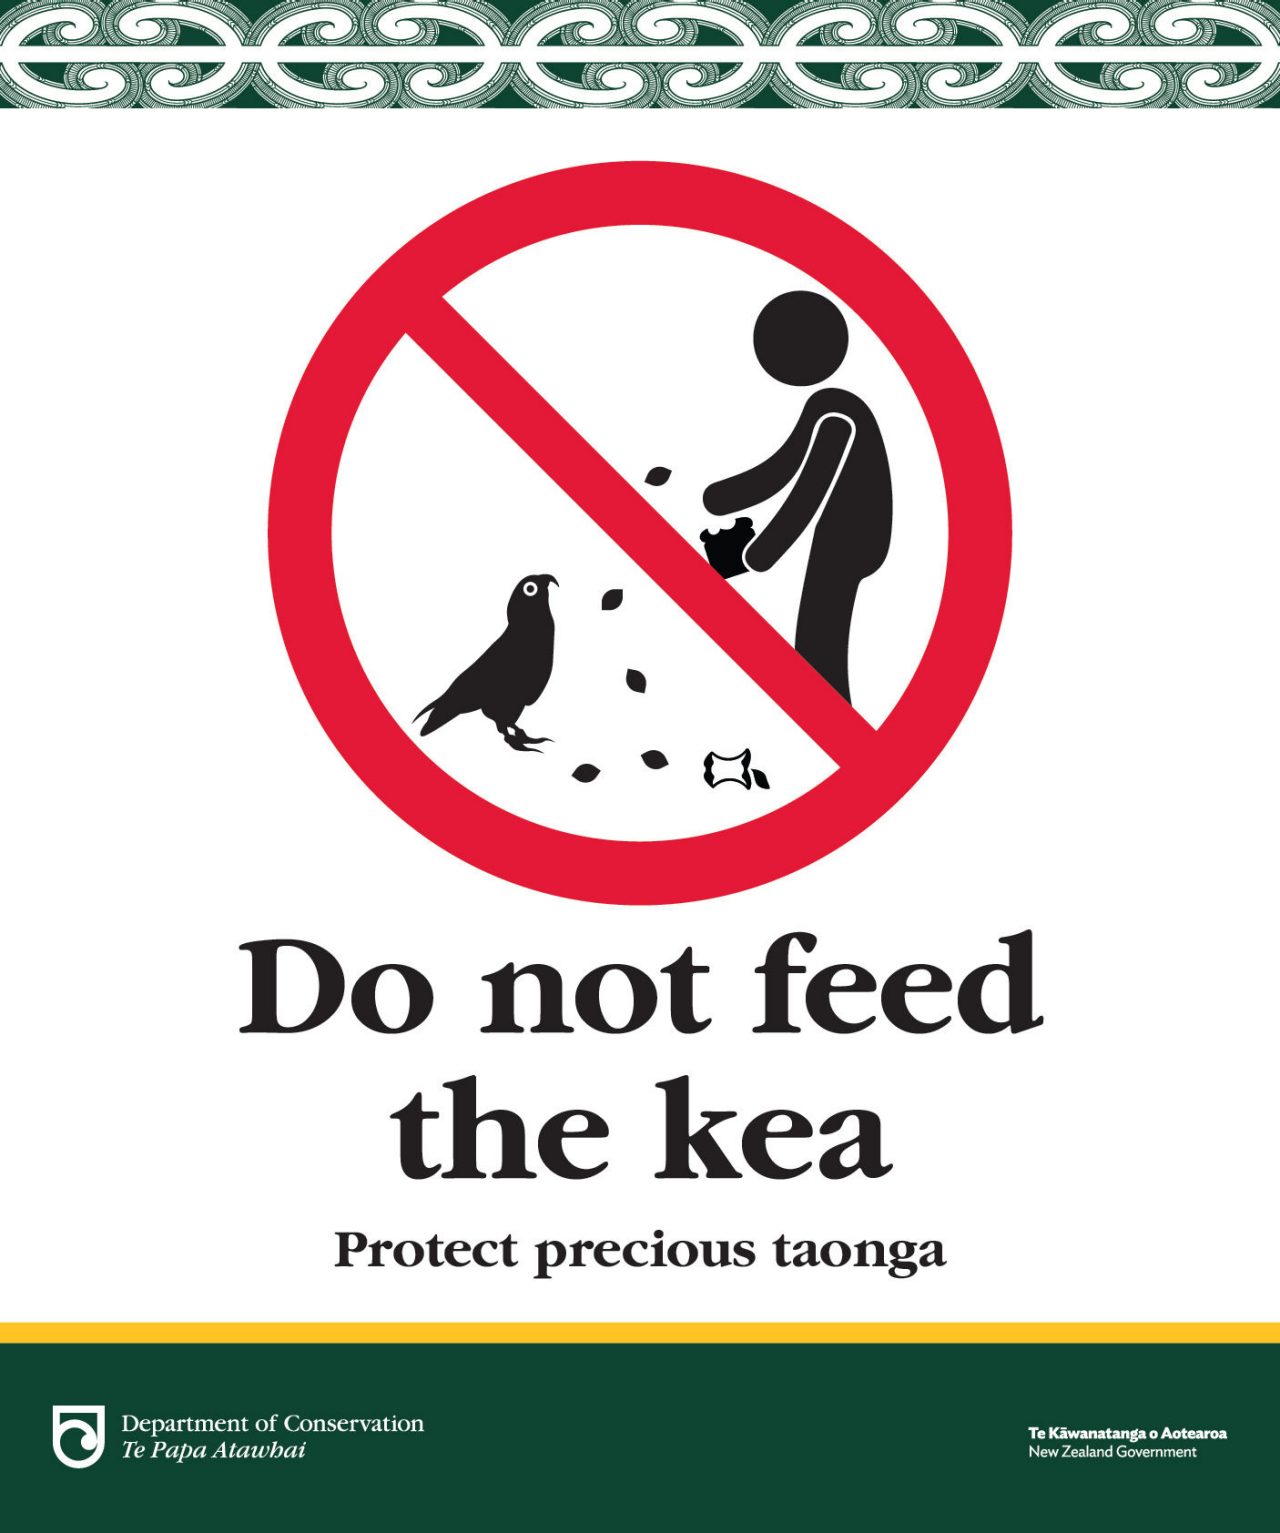 Do not feed the kea signage 